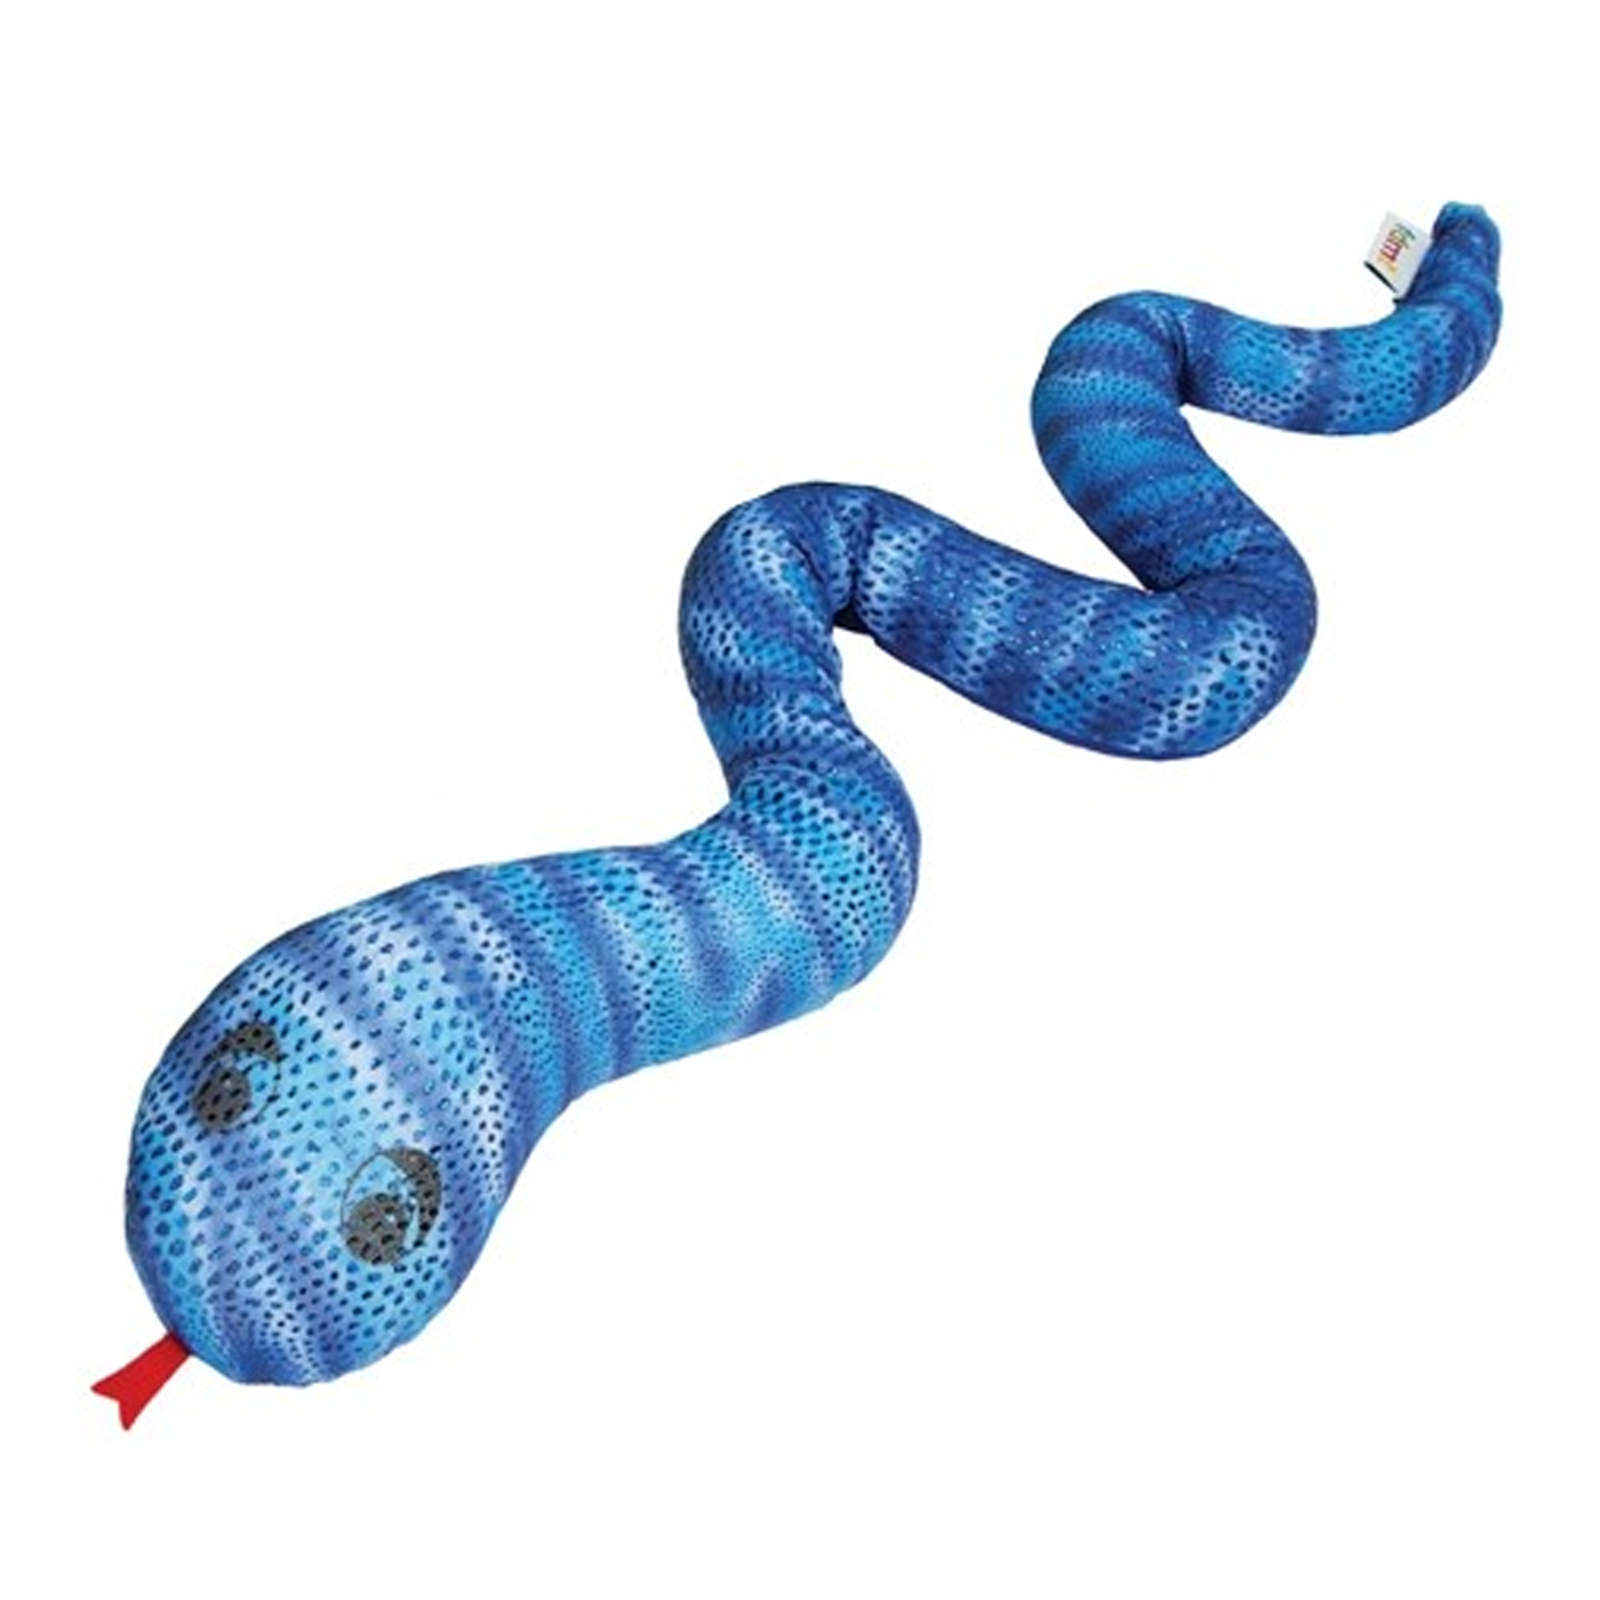 manimo manimo - Snake Blue 1 kg